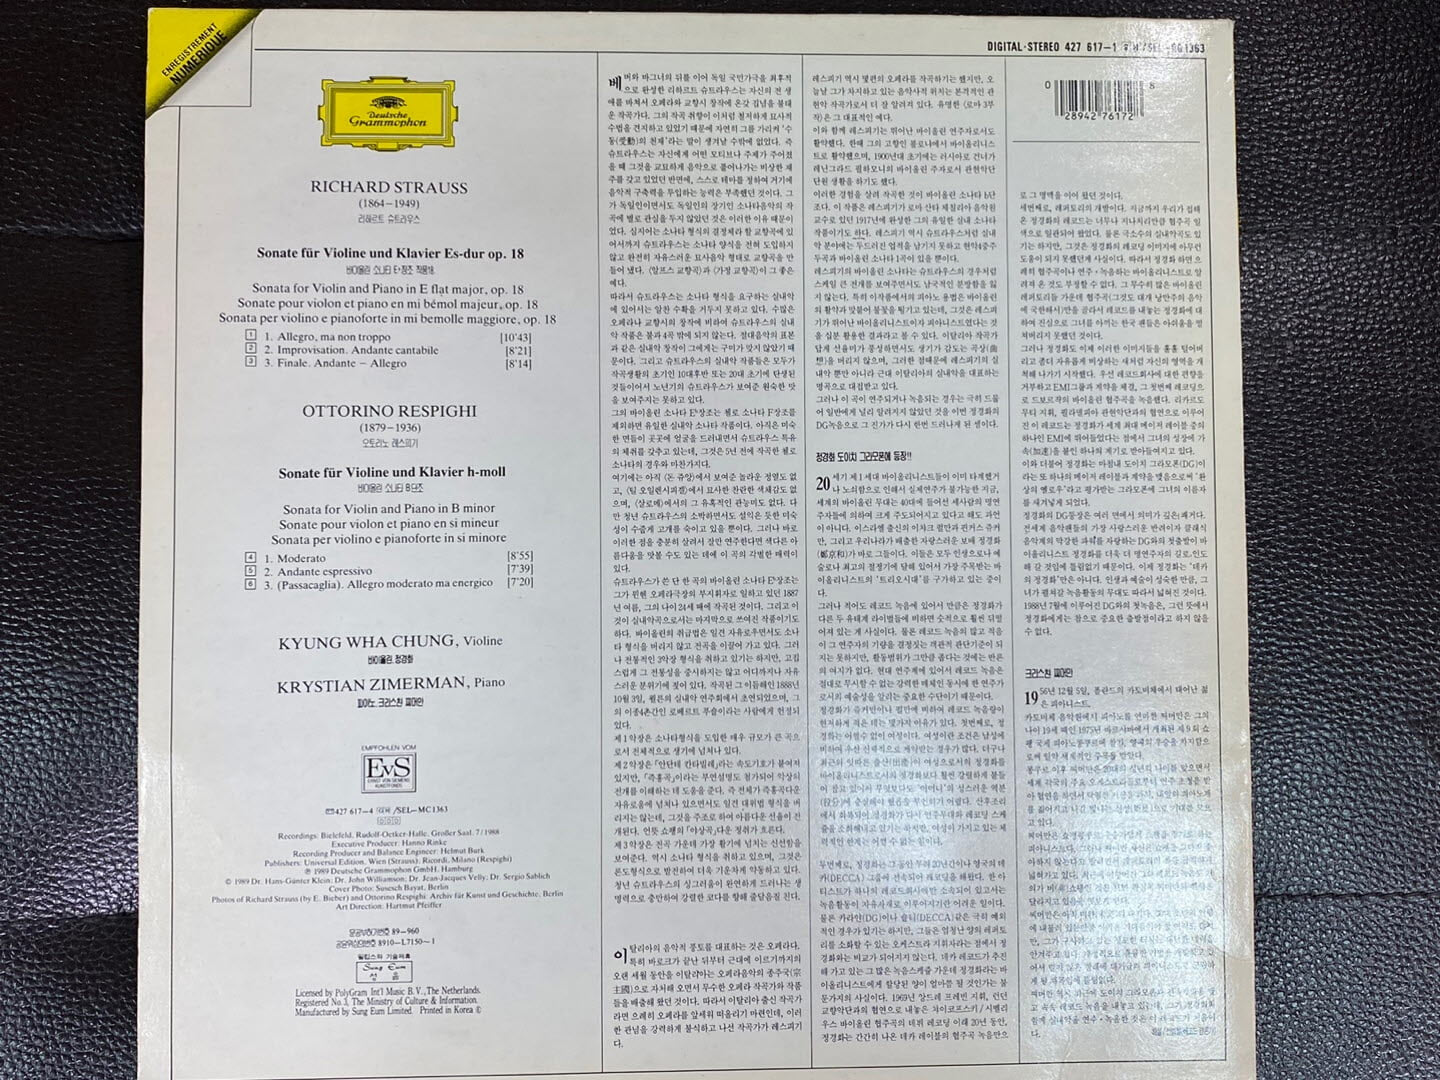 [LP] 정경화,짐머만 - Kyung-Wha Chung,Zimerman - R. Strauss Violin Sonatas LP [정경화님싸인LP] [성음-라이센스반]